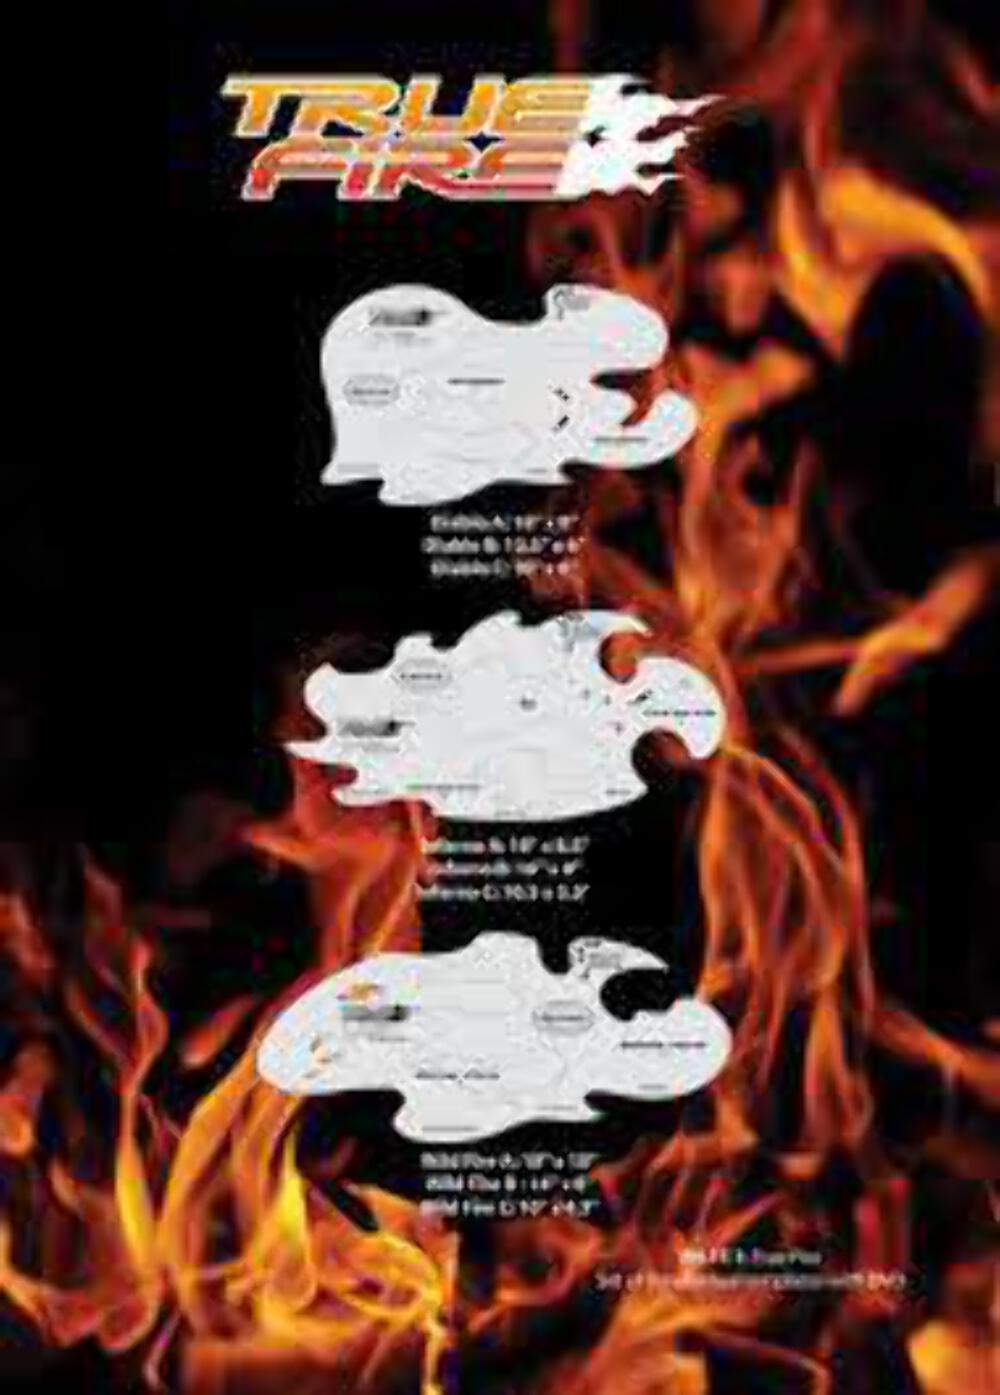 Iwata Mike Lavallee True Fire 2 Second Degree Burn Template Airbrush Stencil Ebay